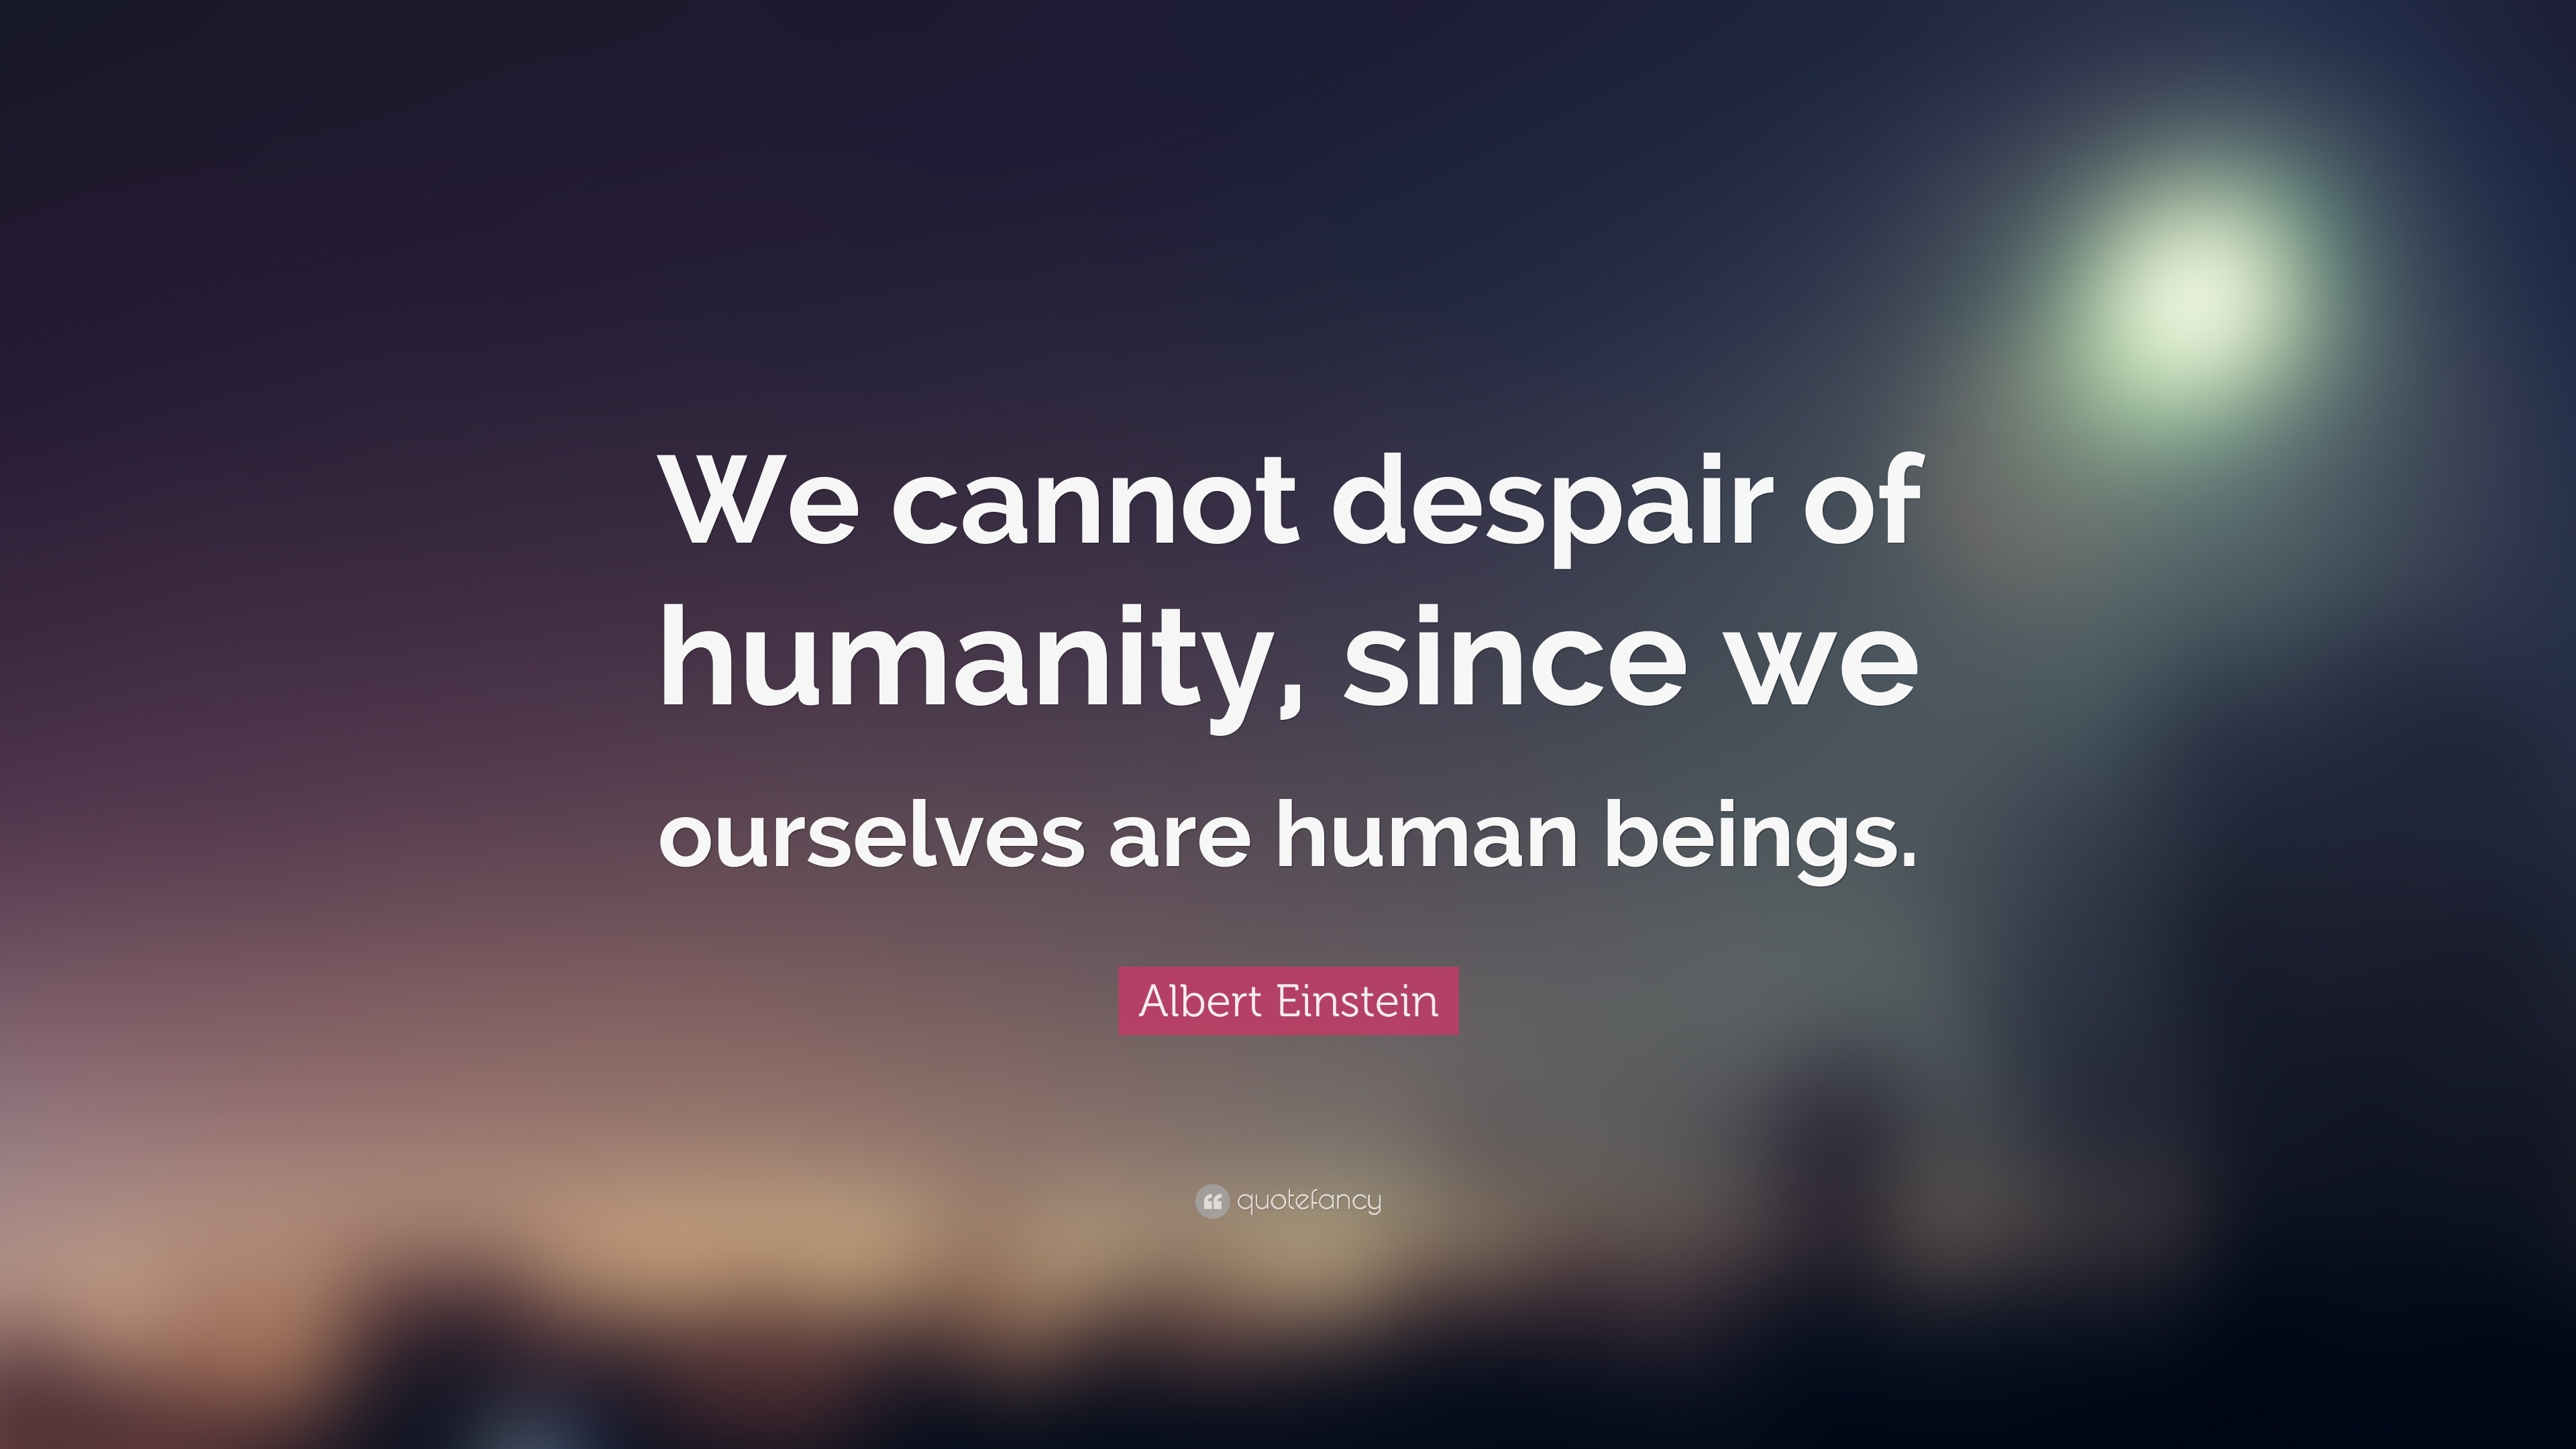 Albert Einstein Quote: “We cannot despair of humanity, since we ...